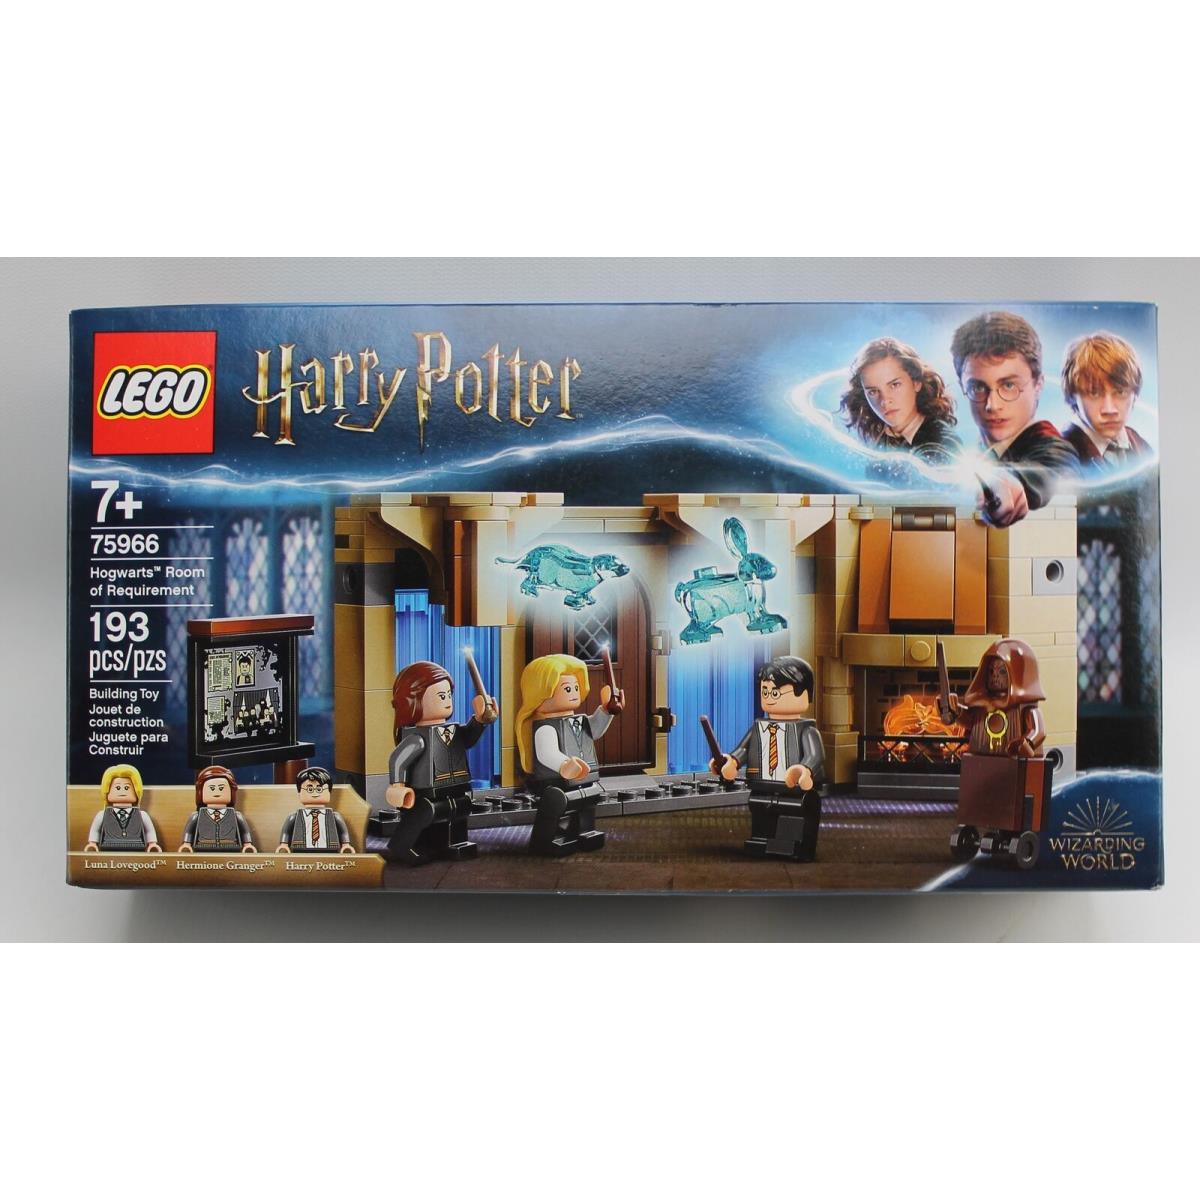 Lego Harry Potter Hogwarts Room of Requirement Set 75966